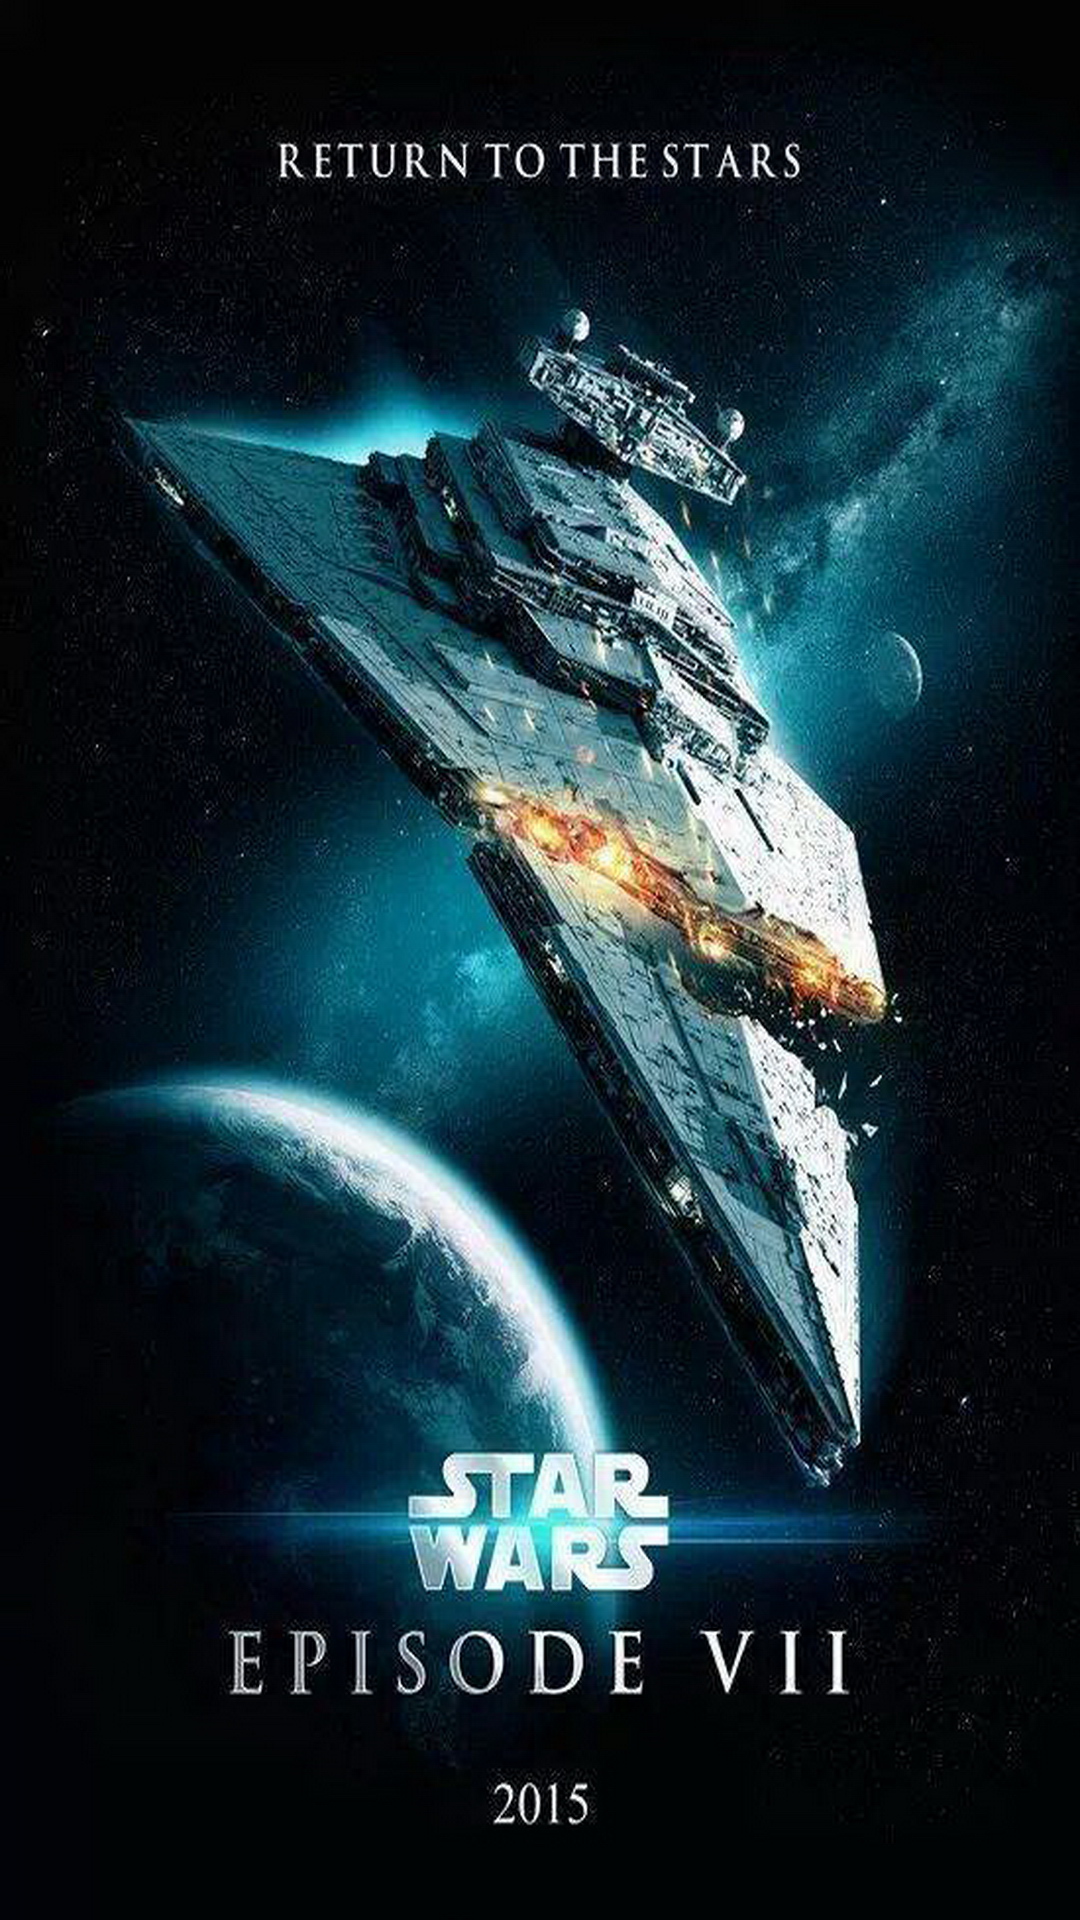 Free download Star Wars Episode VII photos of Epic Star Wars Iphone